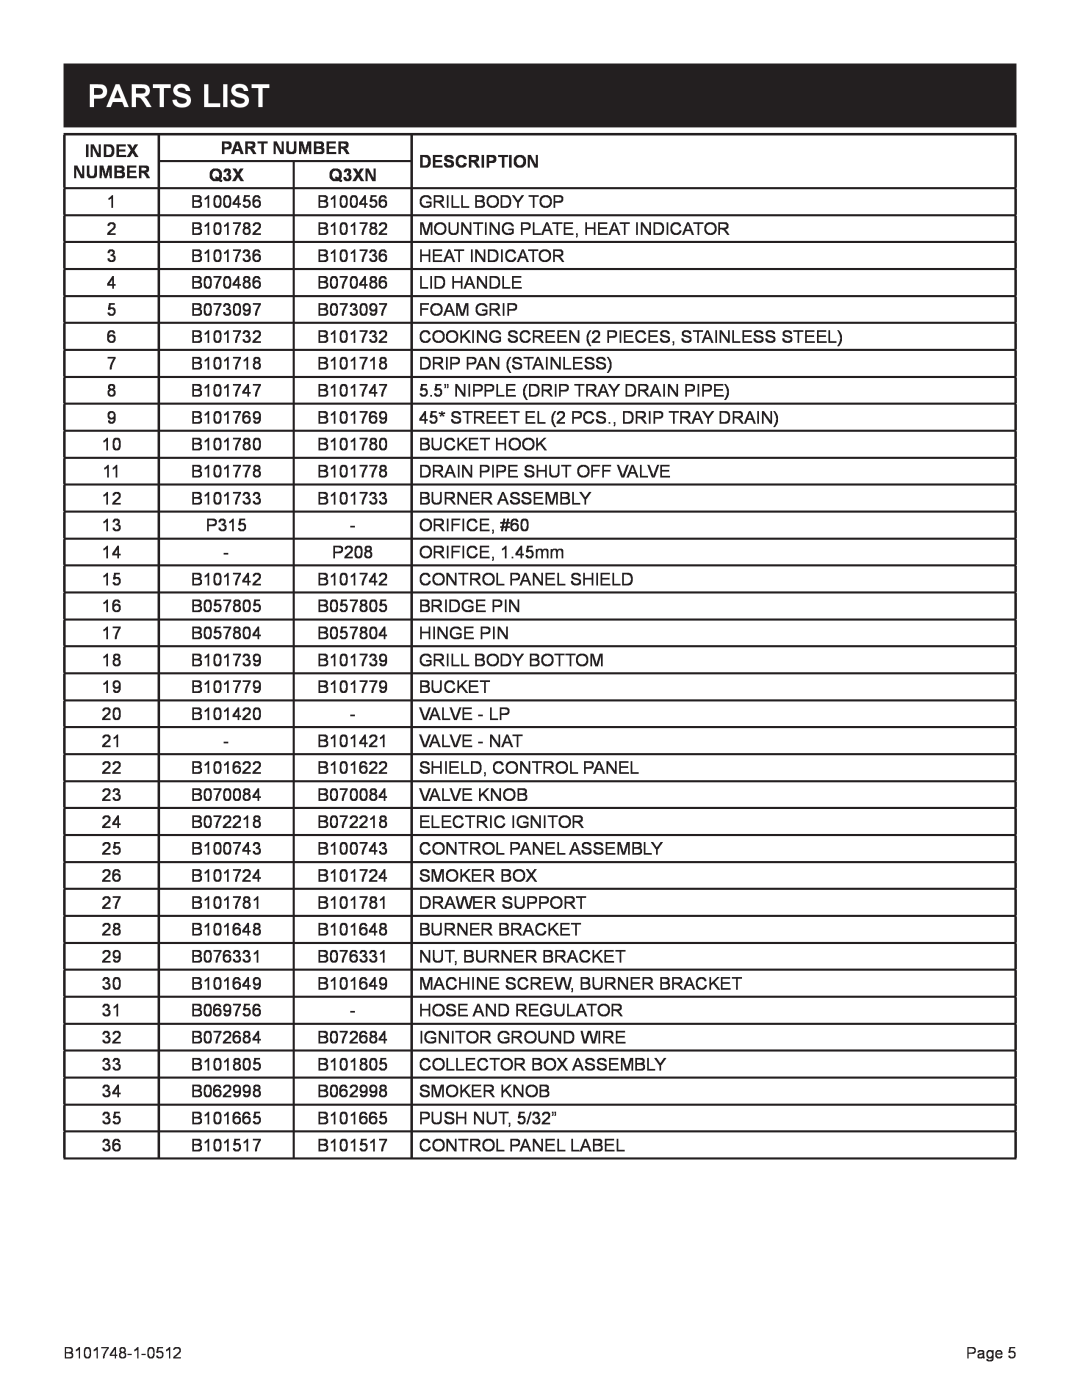 Broilmaster Q3XN-1 owner manual Parts List, Index, Part Number, Description 